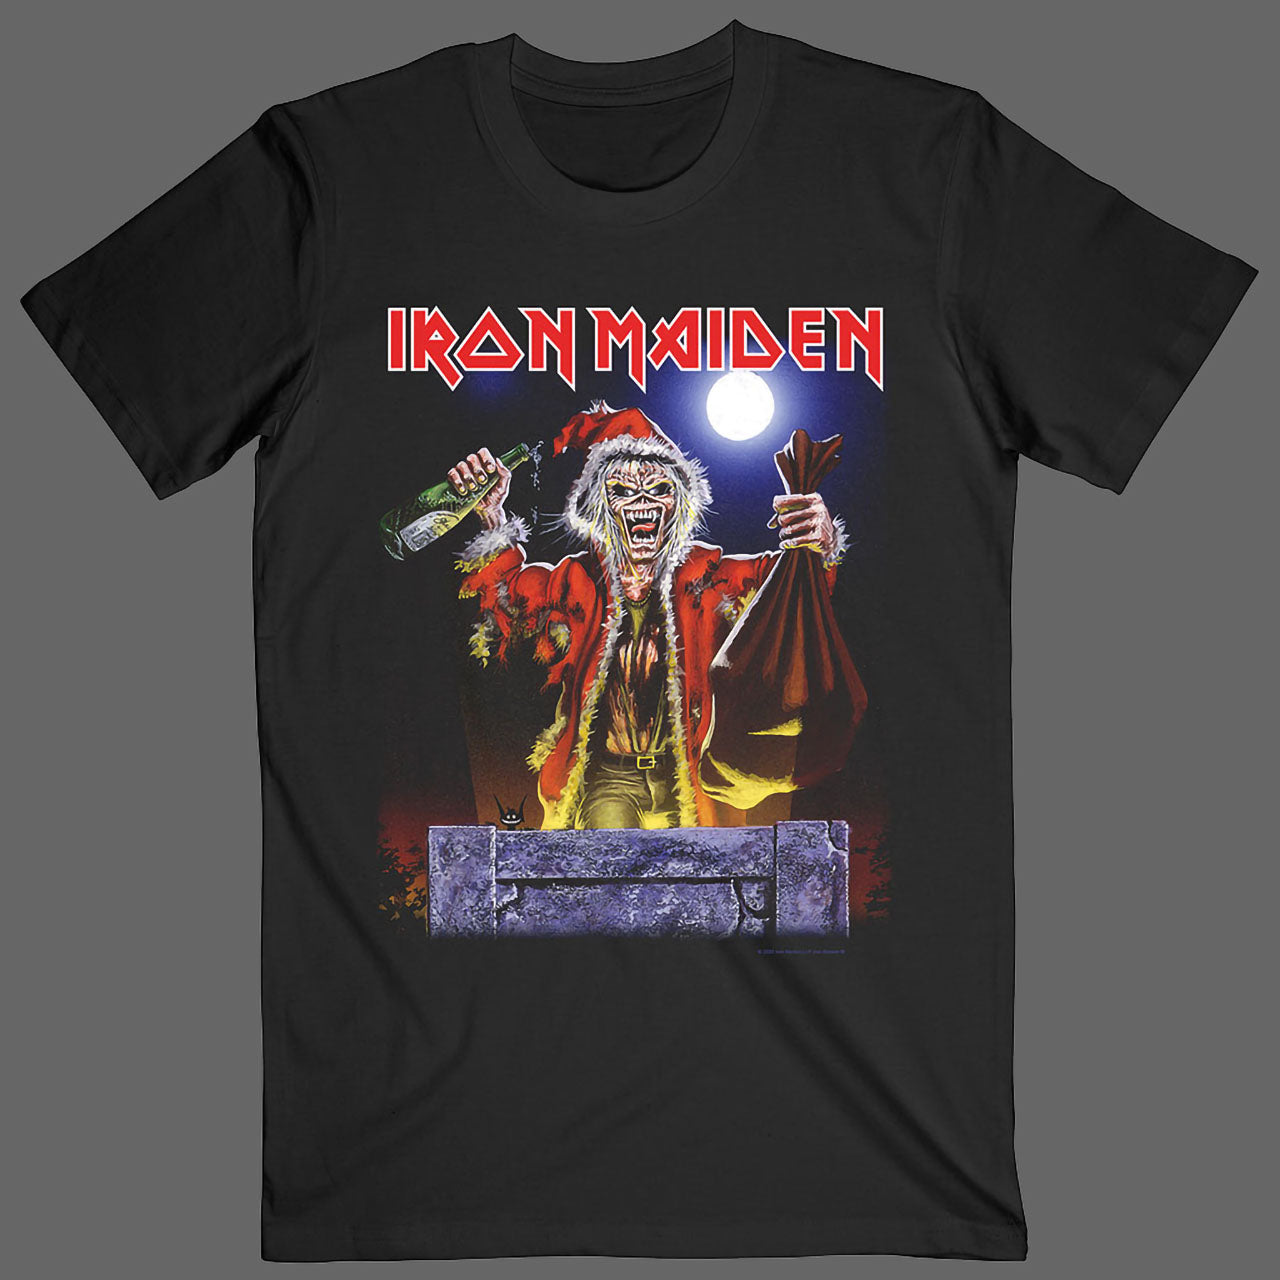 Iron Maiden - No Prayer for Christmas (T-Shirt) Todestrieb